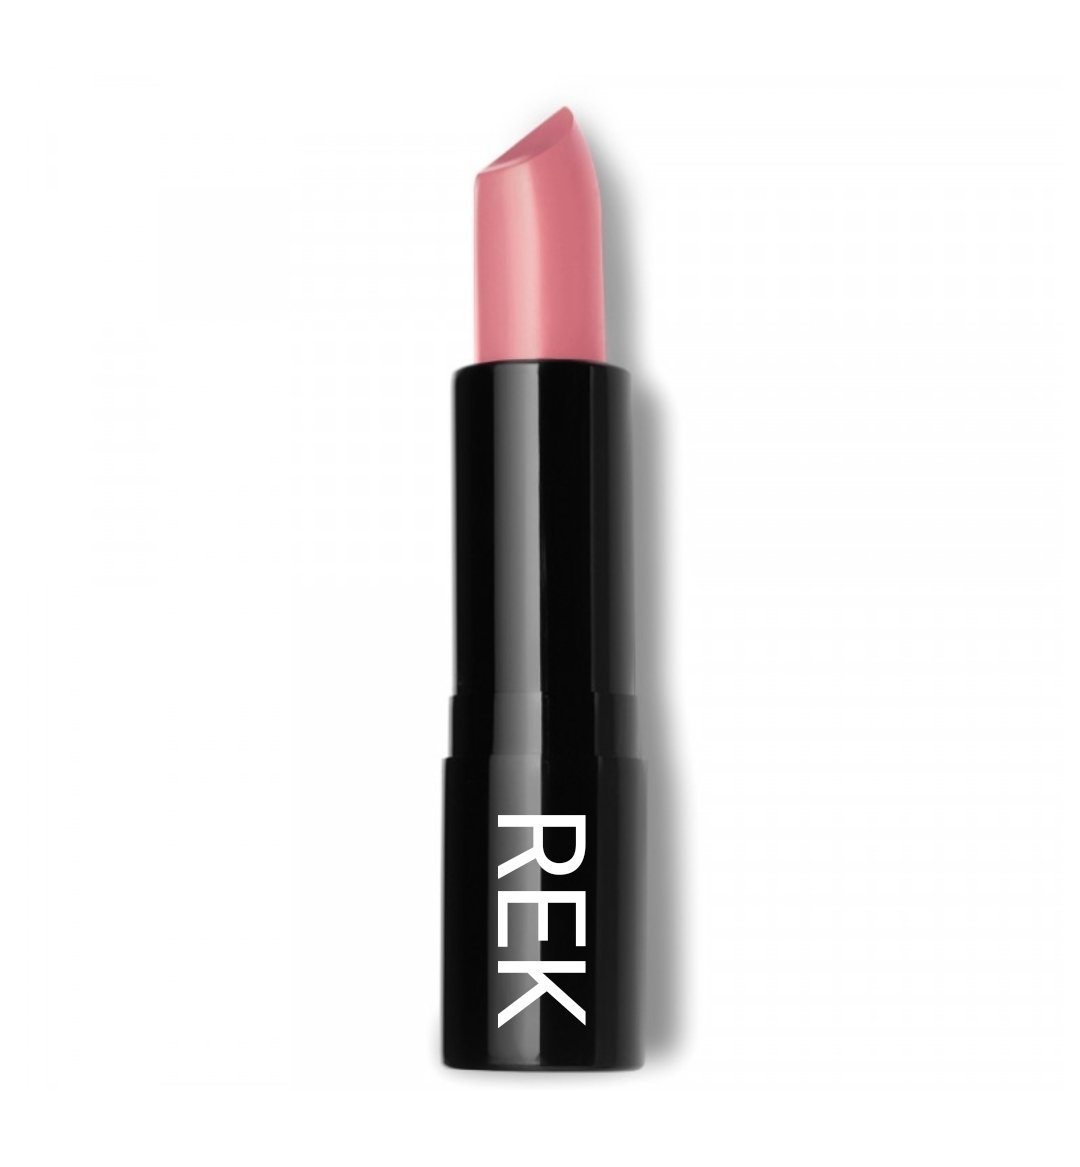 Poppet | Sheer Shine Lipstick | REK Cosmetics - Premium Lipstick from REK Cosmetics - Just $20! Shop now at REK Cosmetics